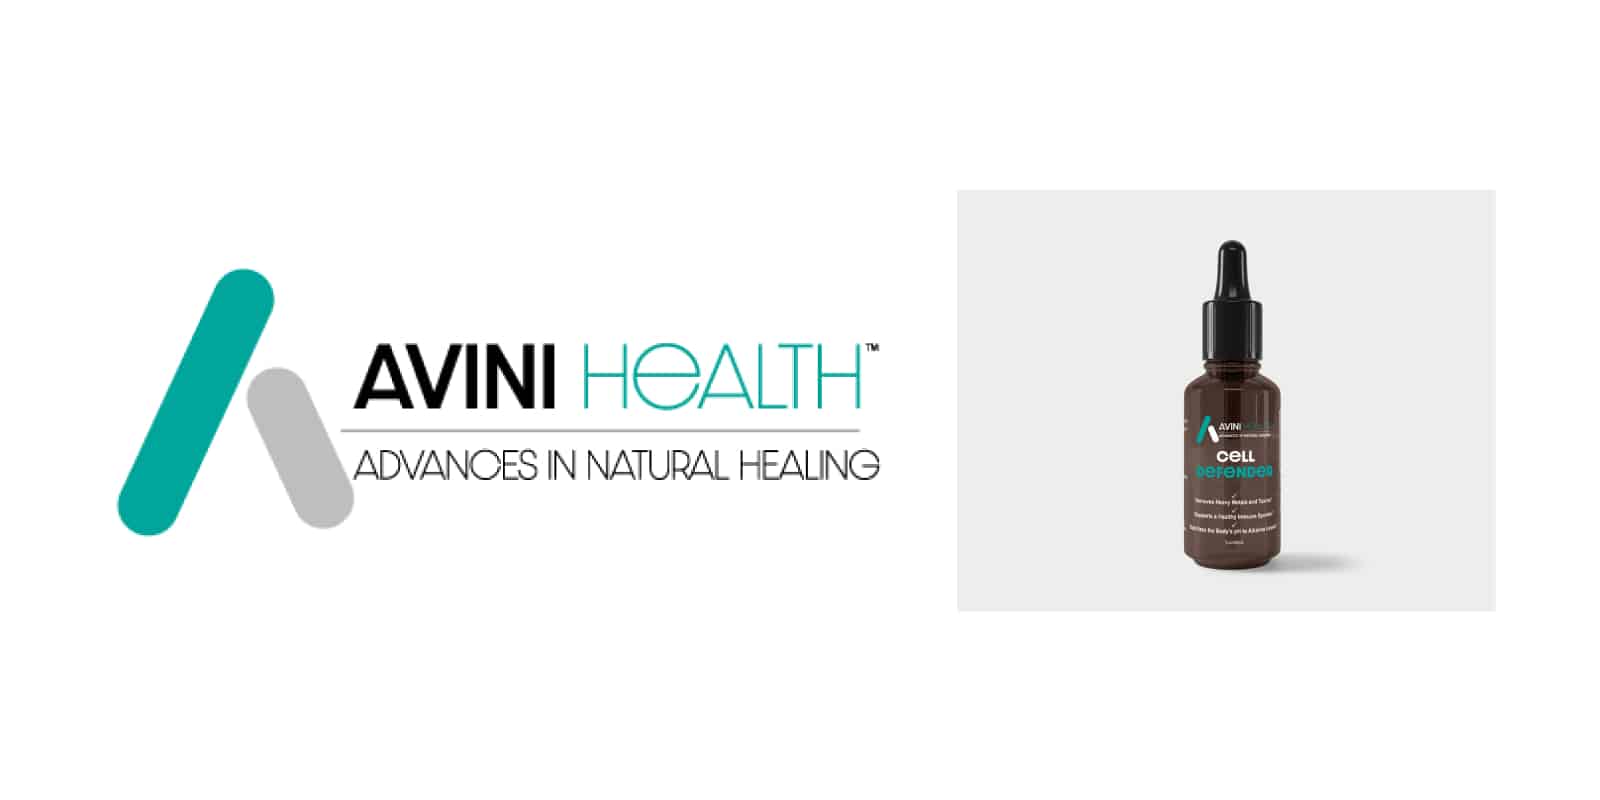 Avini Health